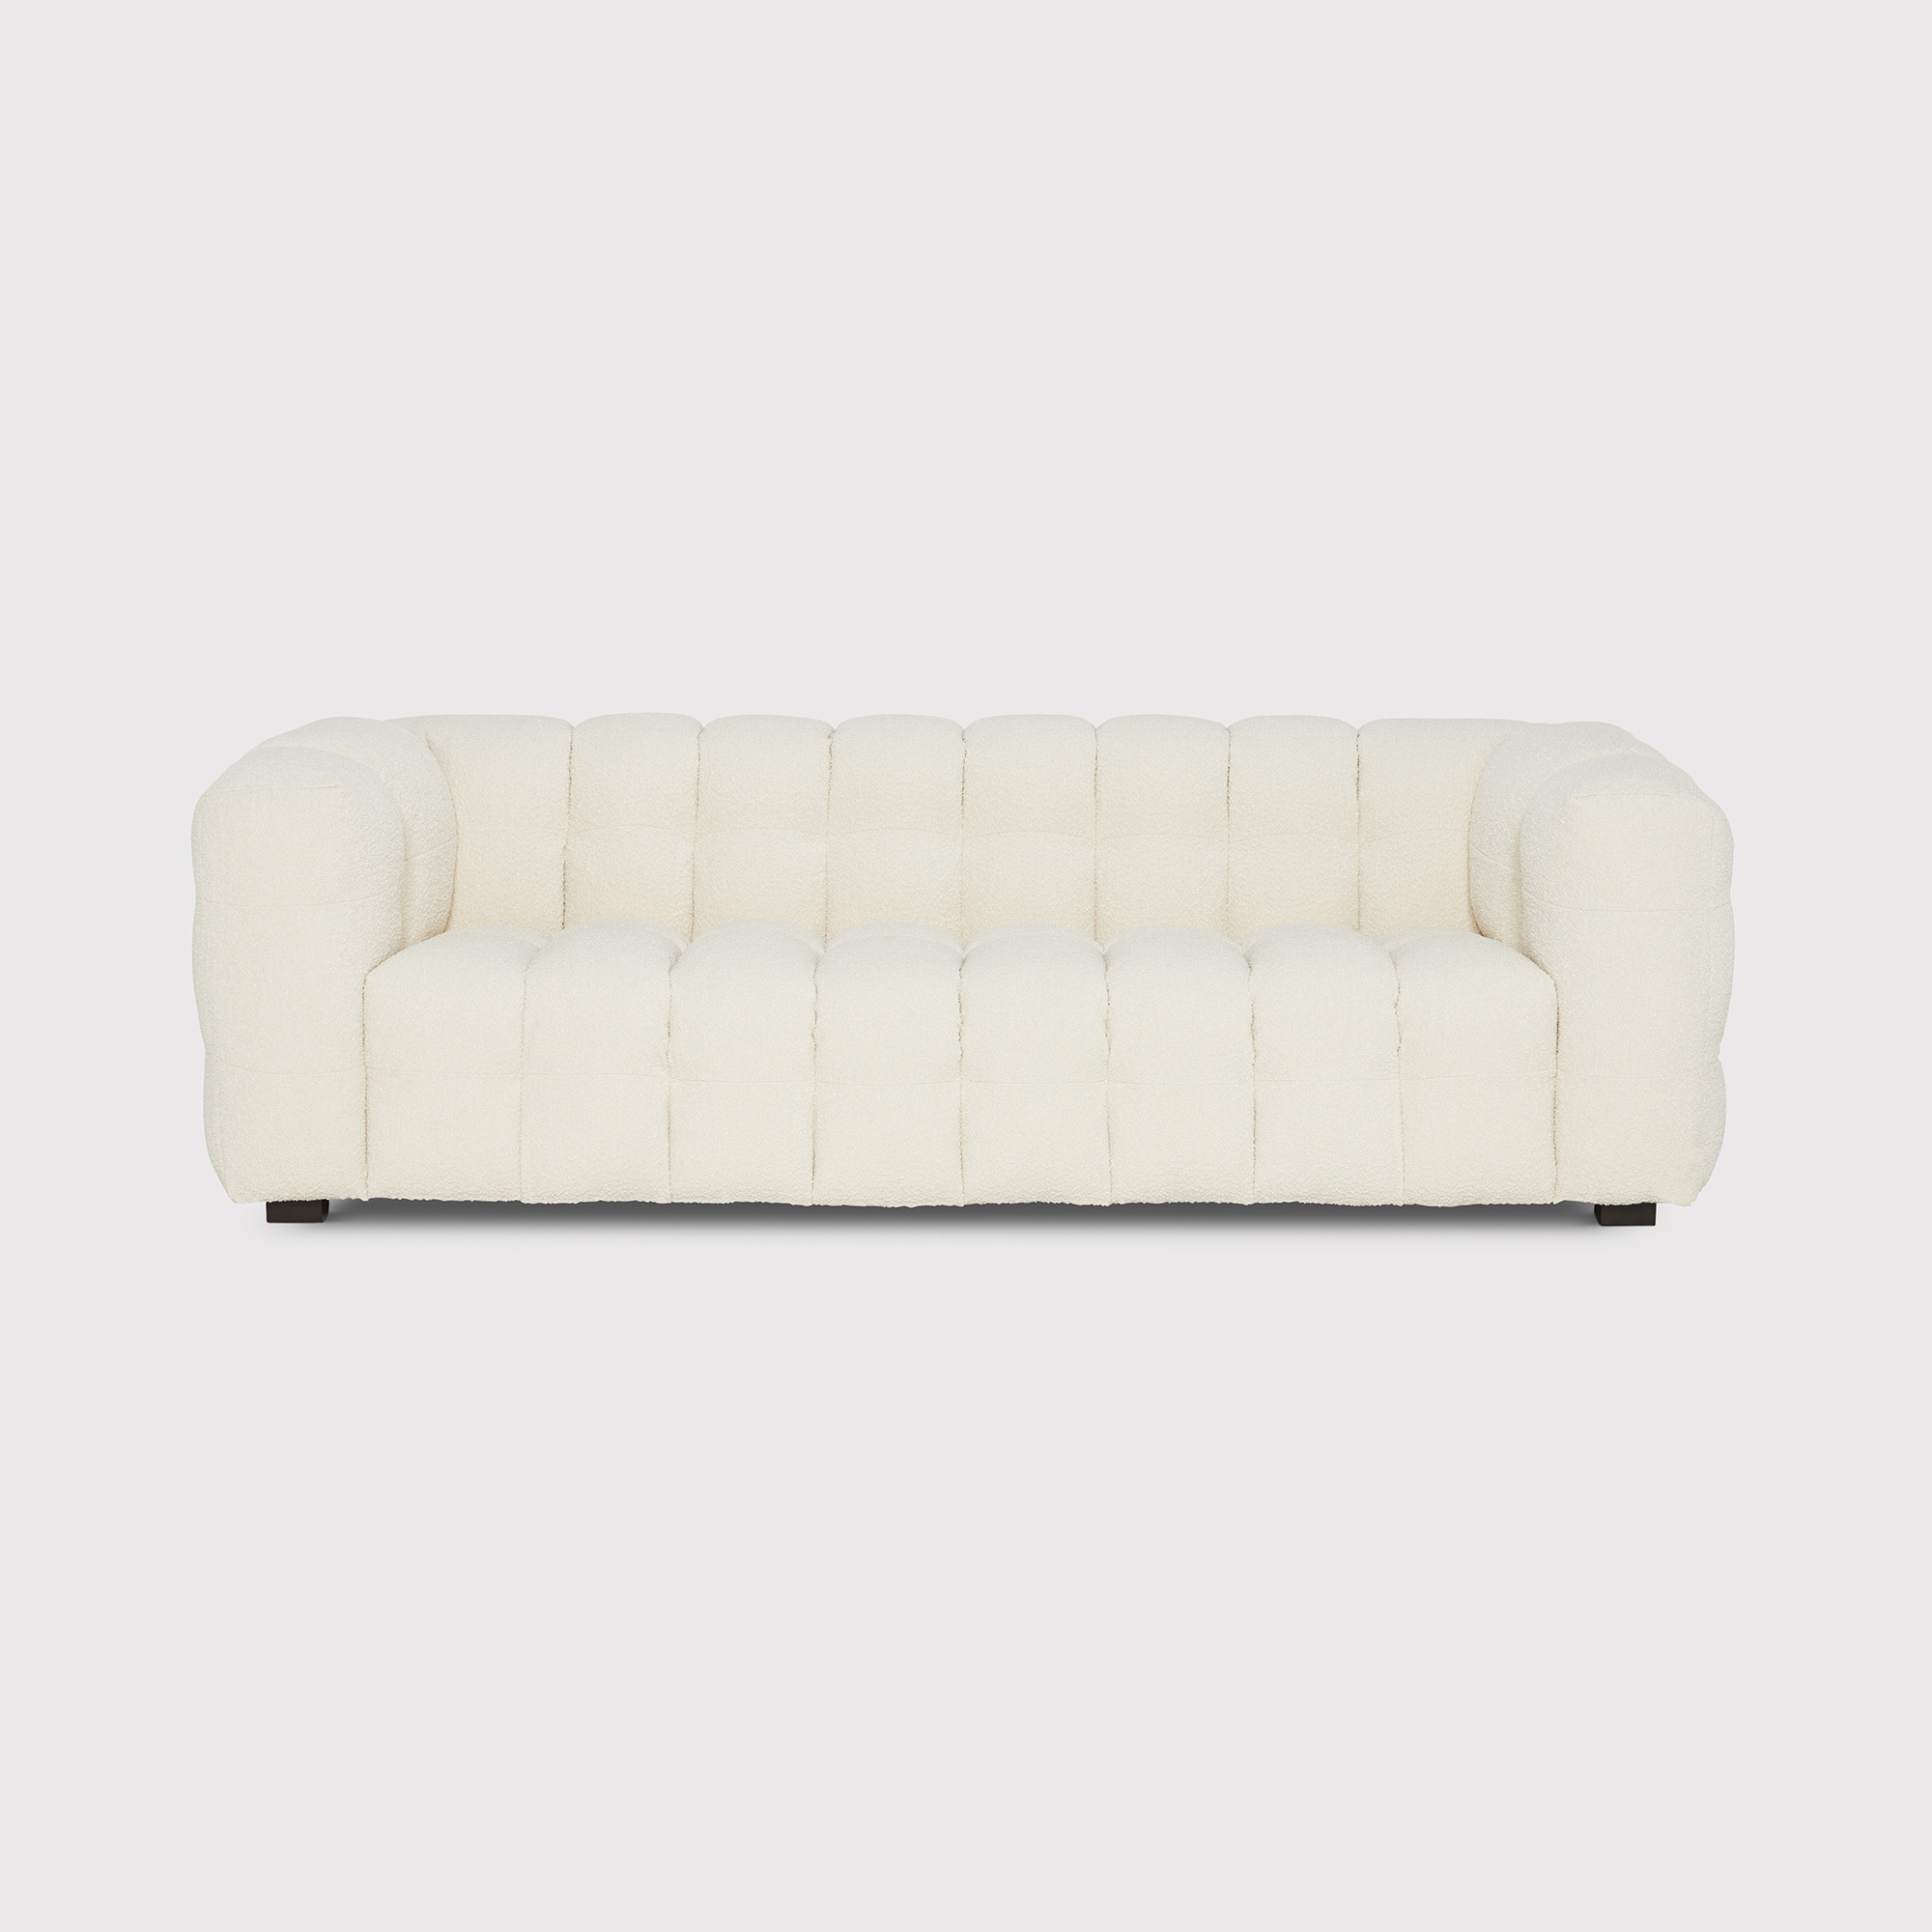 Lenor Sofa, White Fabric - Barker & Stonehouse - image 1